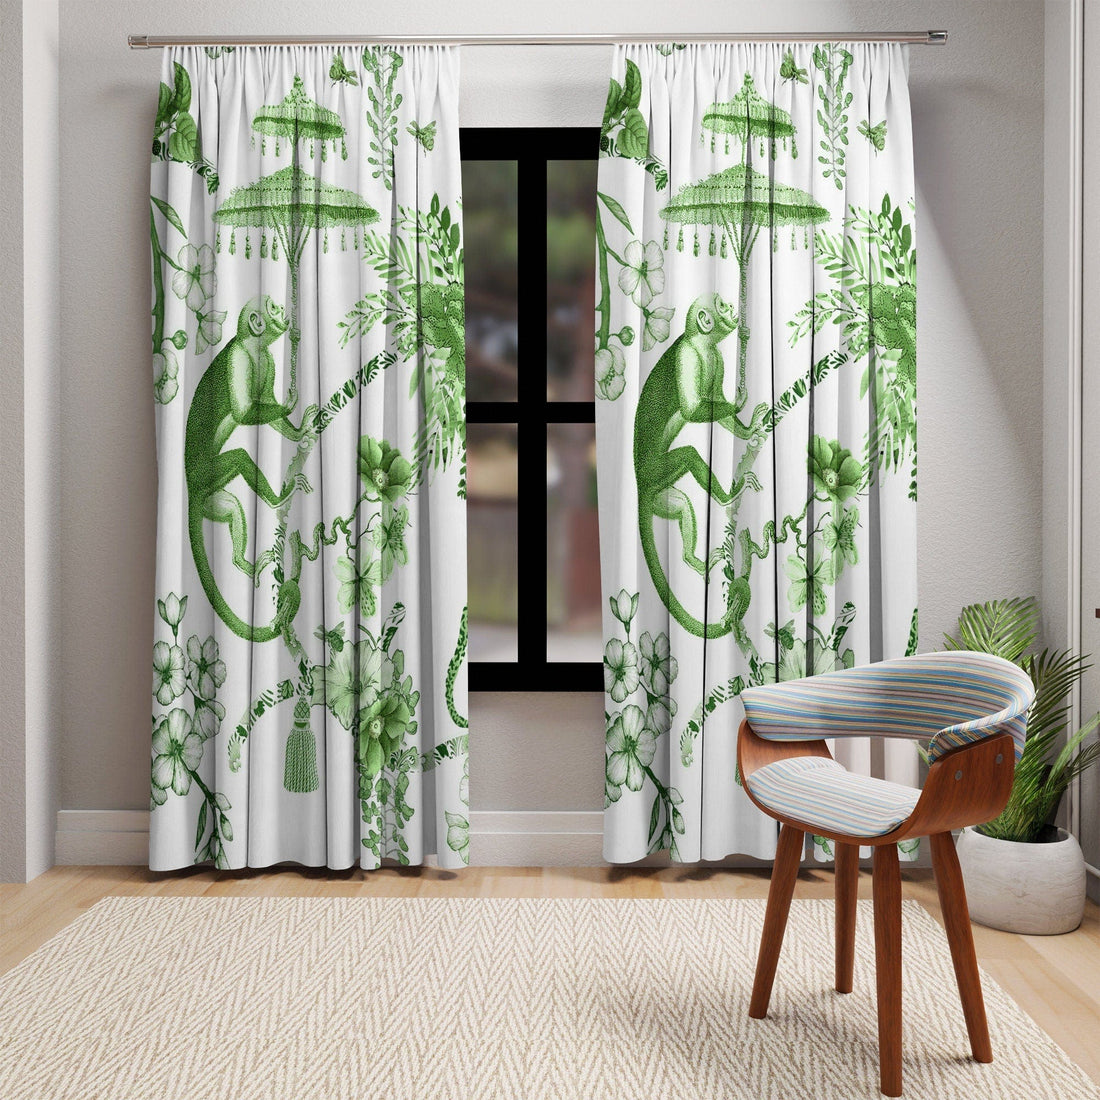 Kate McEnroe New York Chinoiserie Jungle Botanical Toile Window Curtains, Green, White Chinoiserie Floral Curtain Panels, Country Farmhouse Decor - 122481123Window CurtainsW3D - MON - OYG - SH3